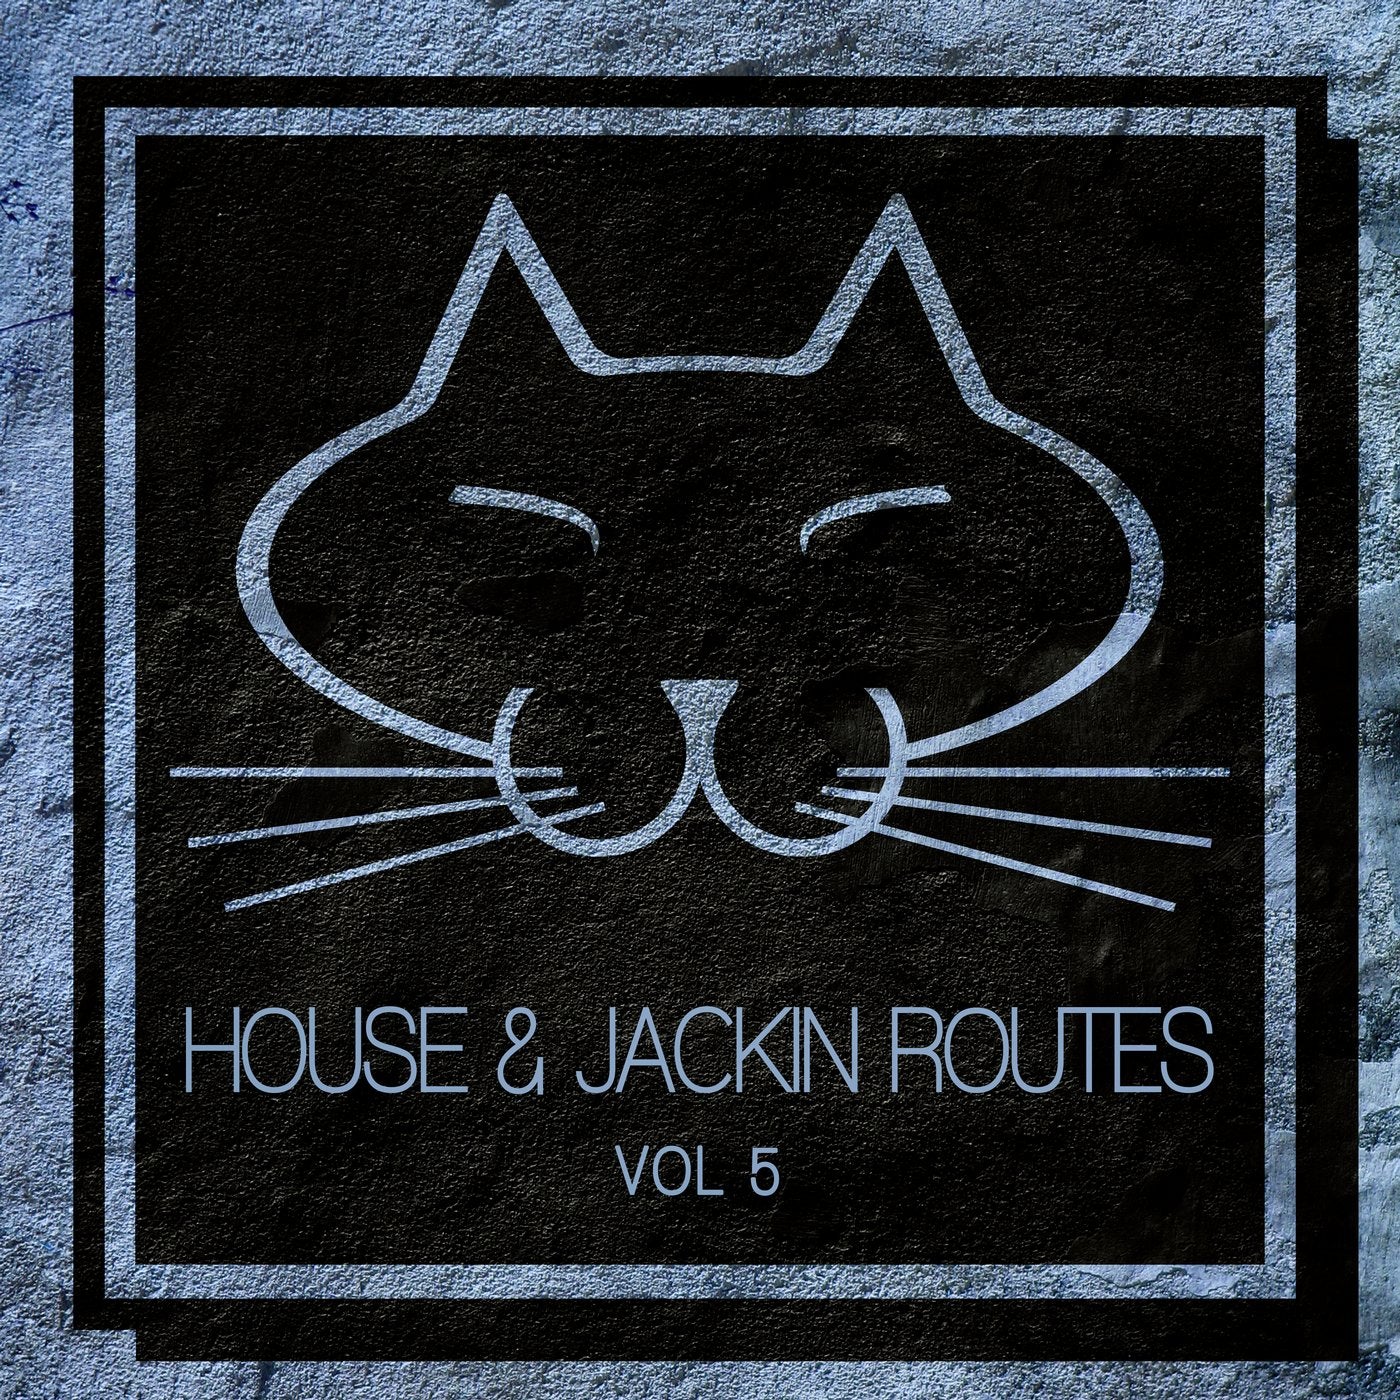 House & Jackin Routes, Vol. 5